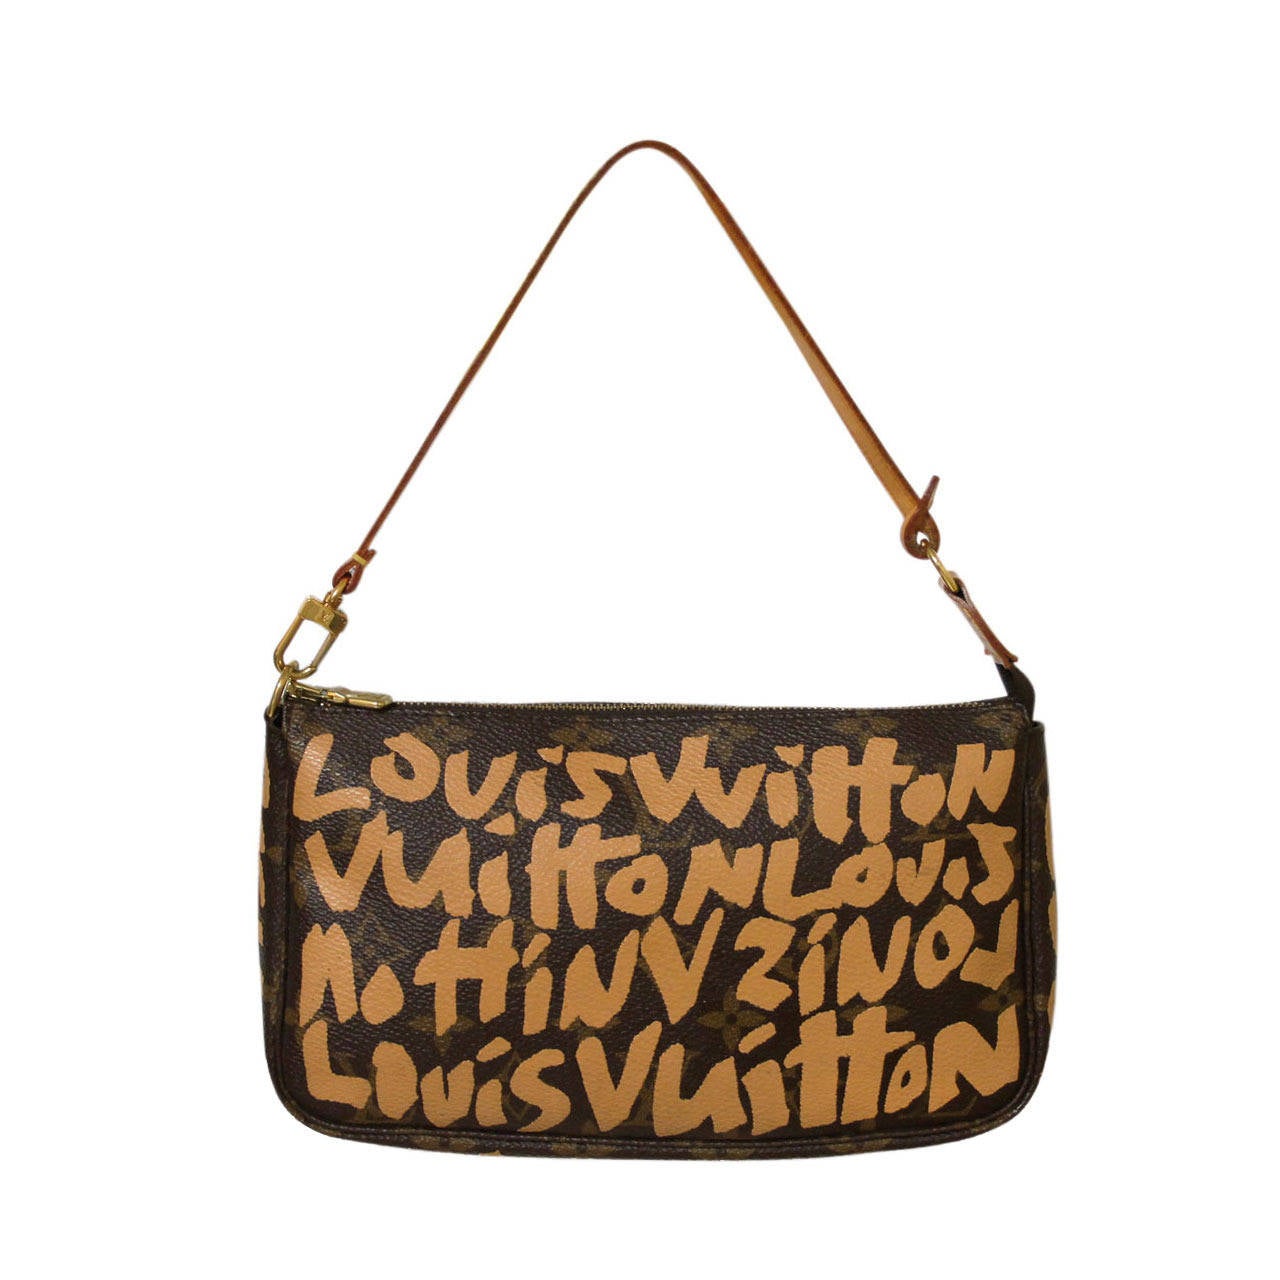 Louis Vuitton Stephen Sprouse Graffiti Accessories Pochette Handbag Purse at 1stdibs